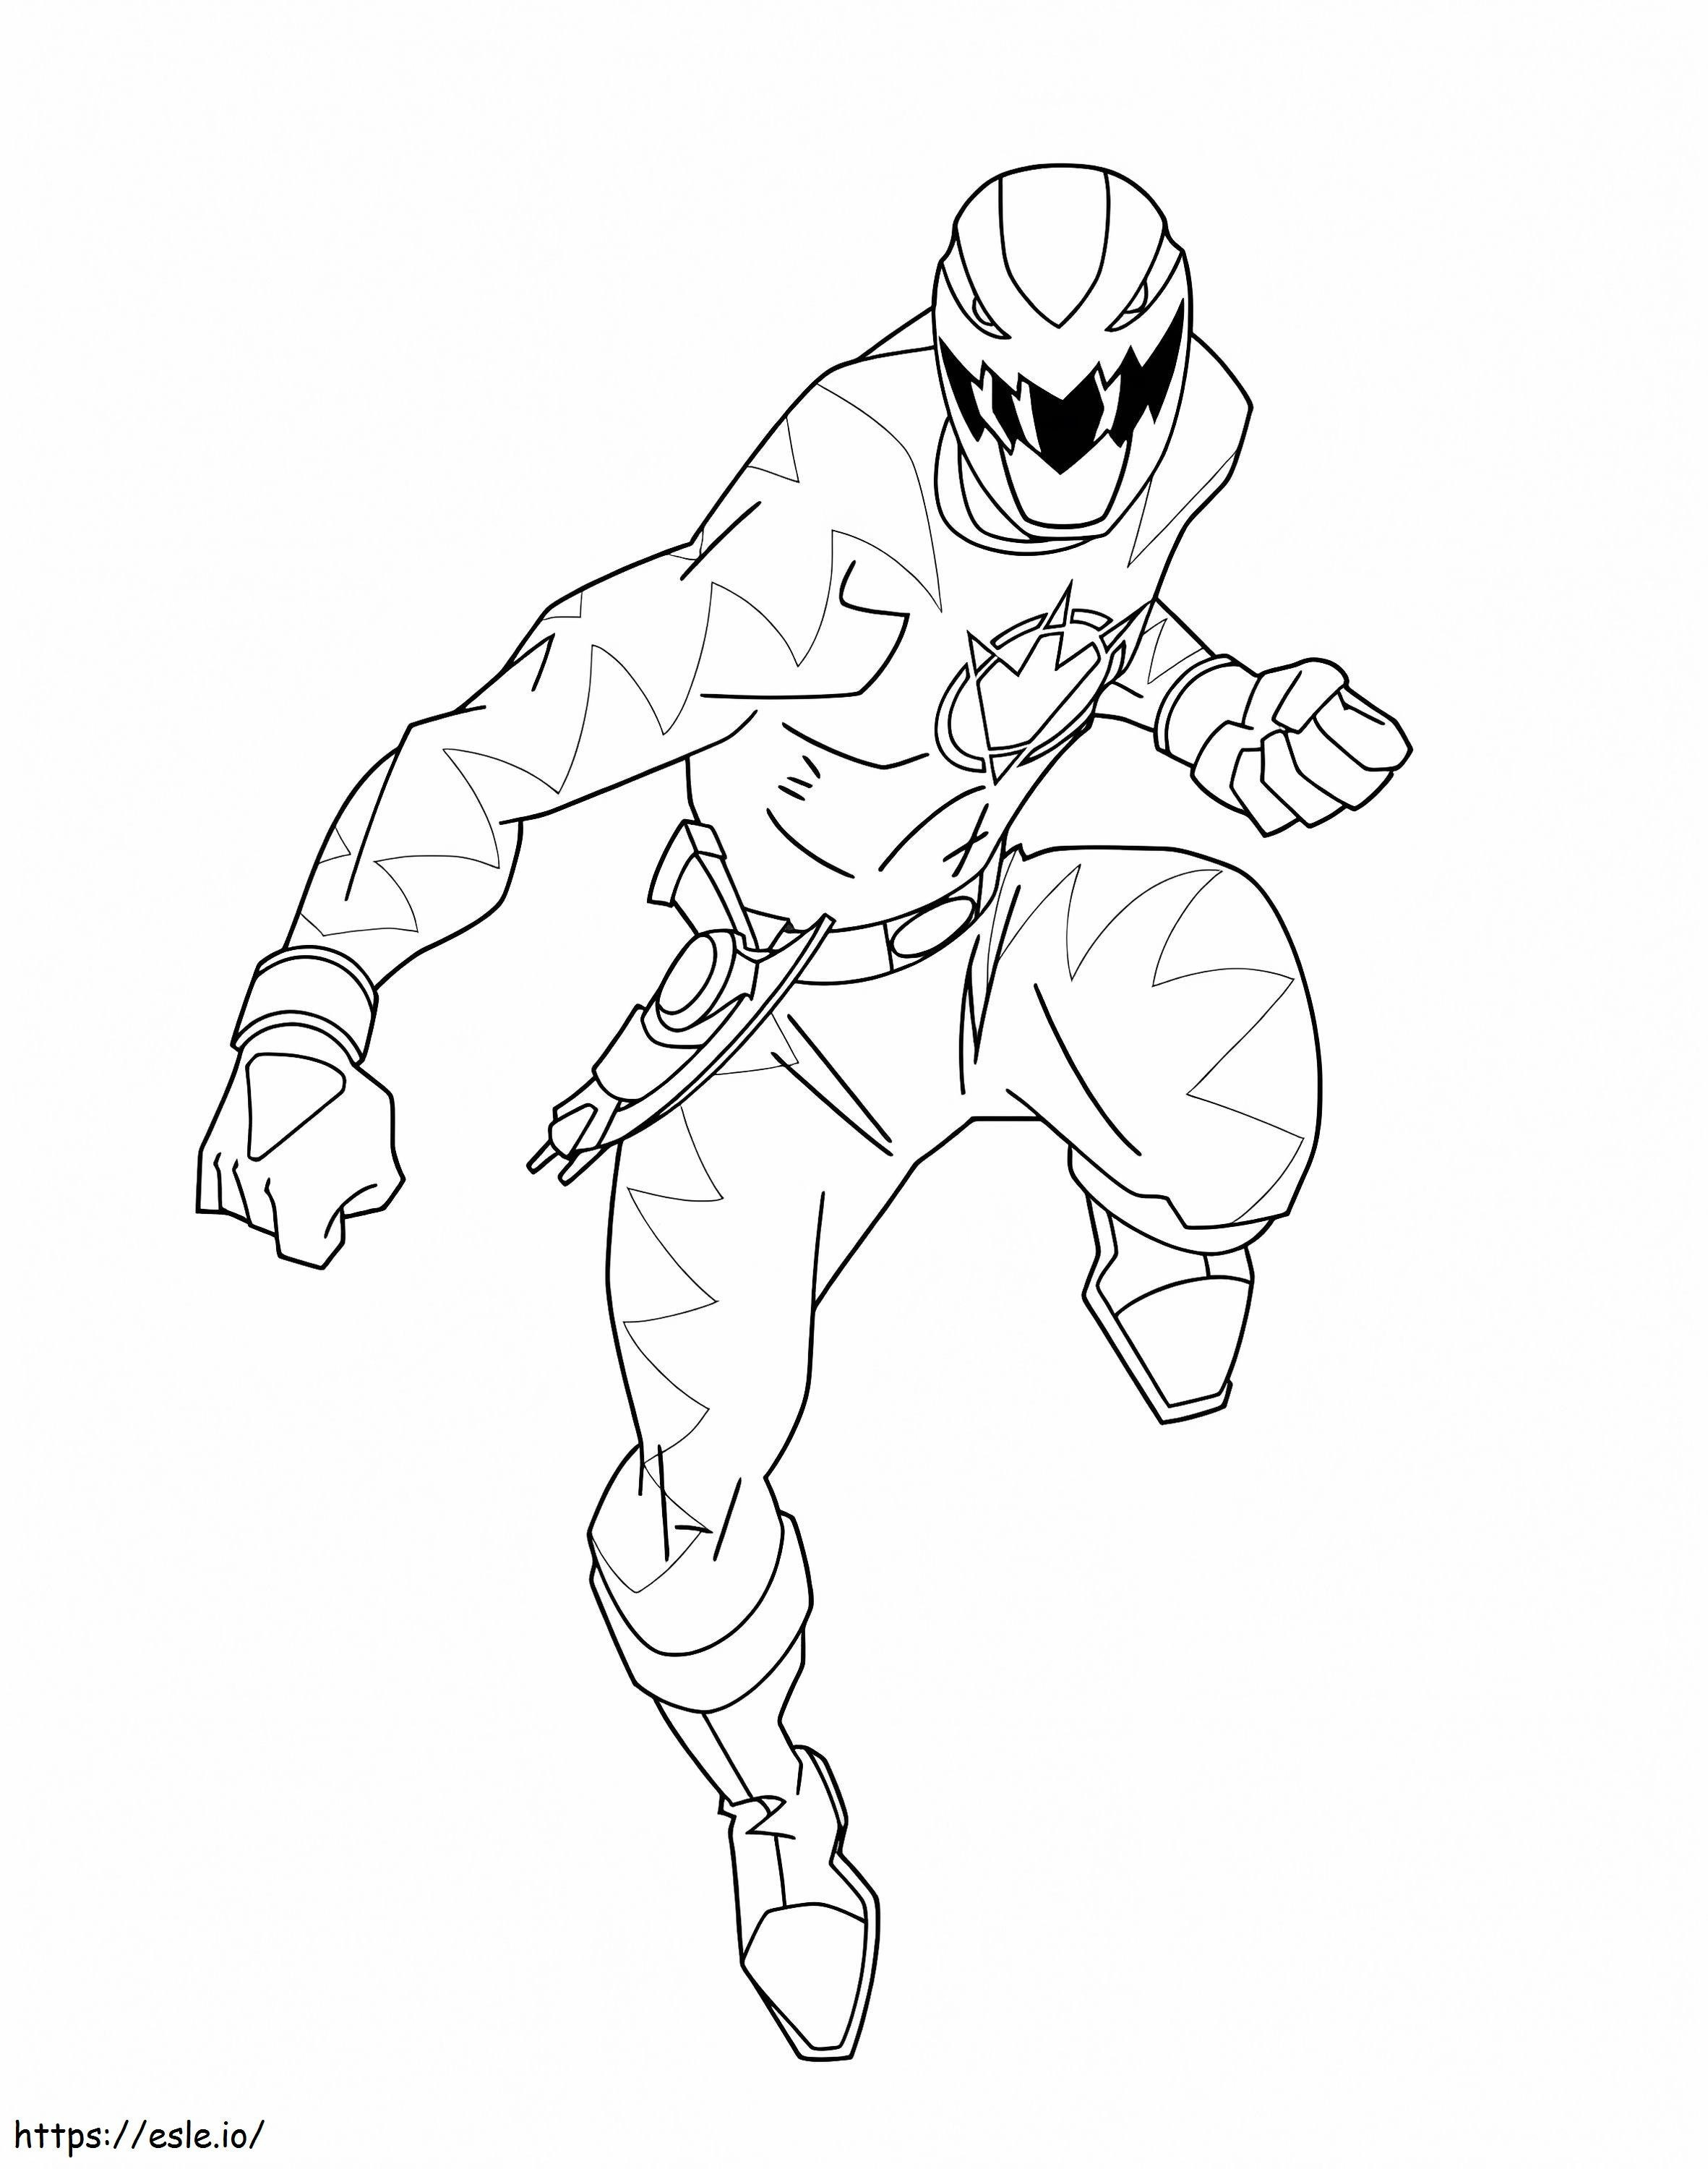 Power Rangers Dino Trovão para colorir